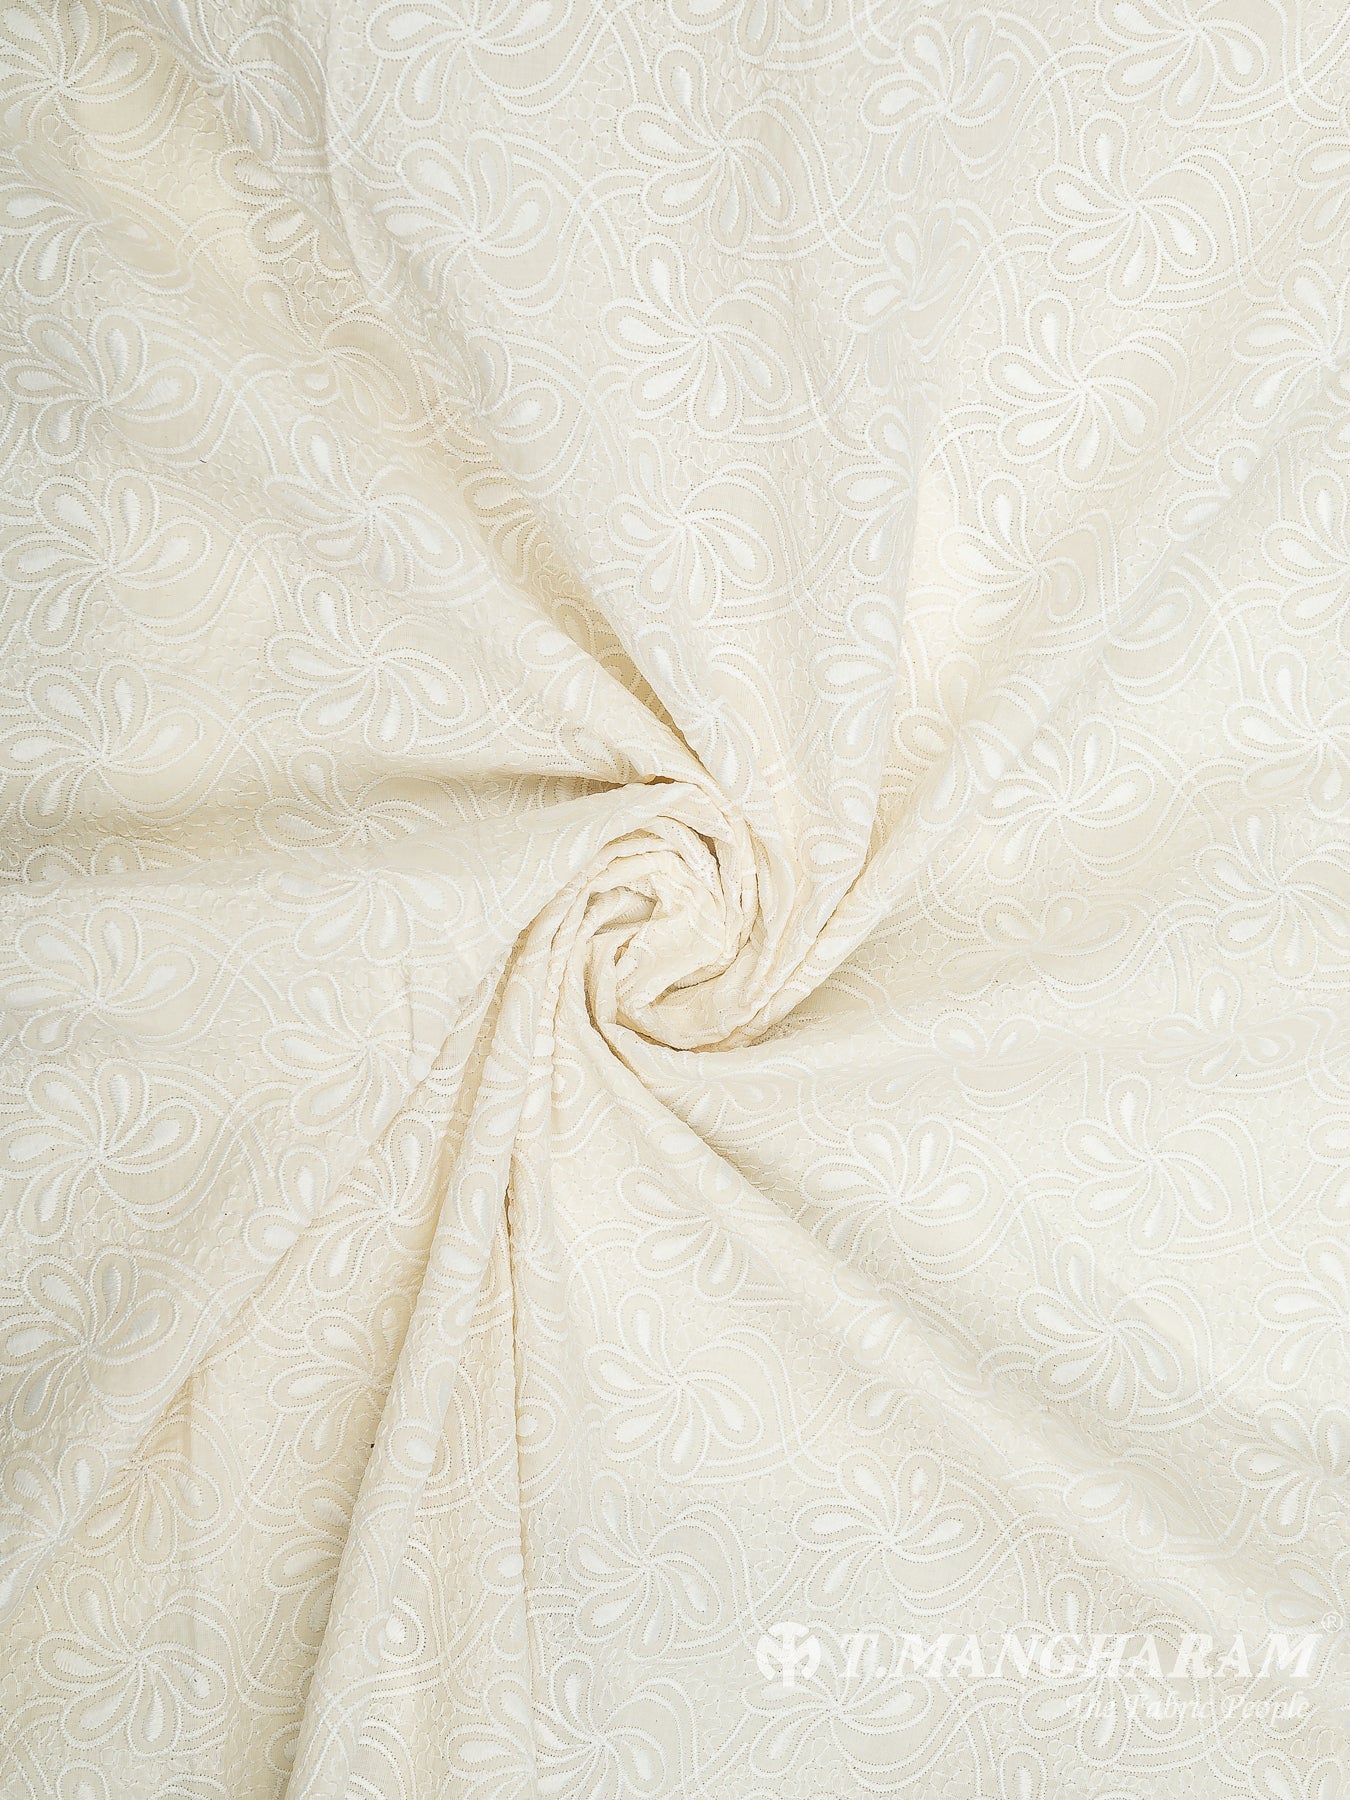 Cream Cotton Embroidery Fabric - EC8285 view-1